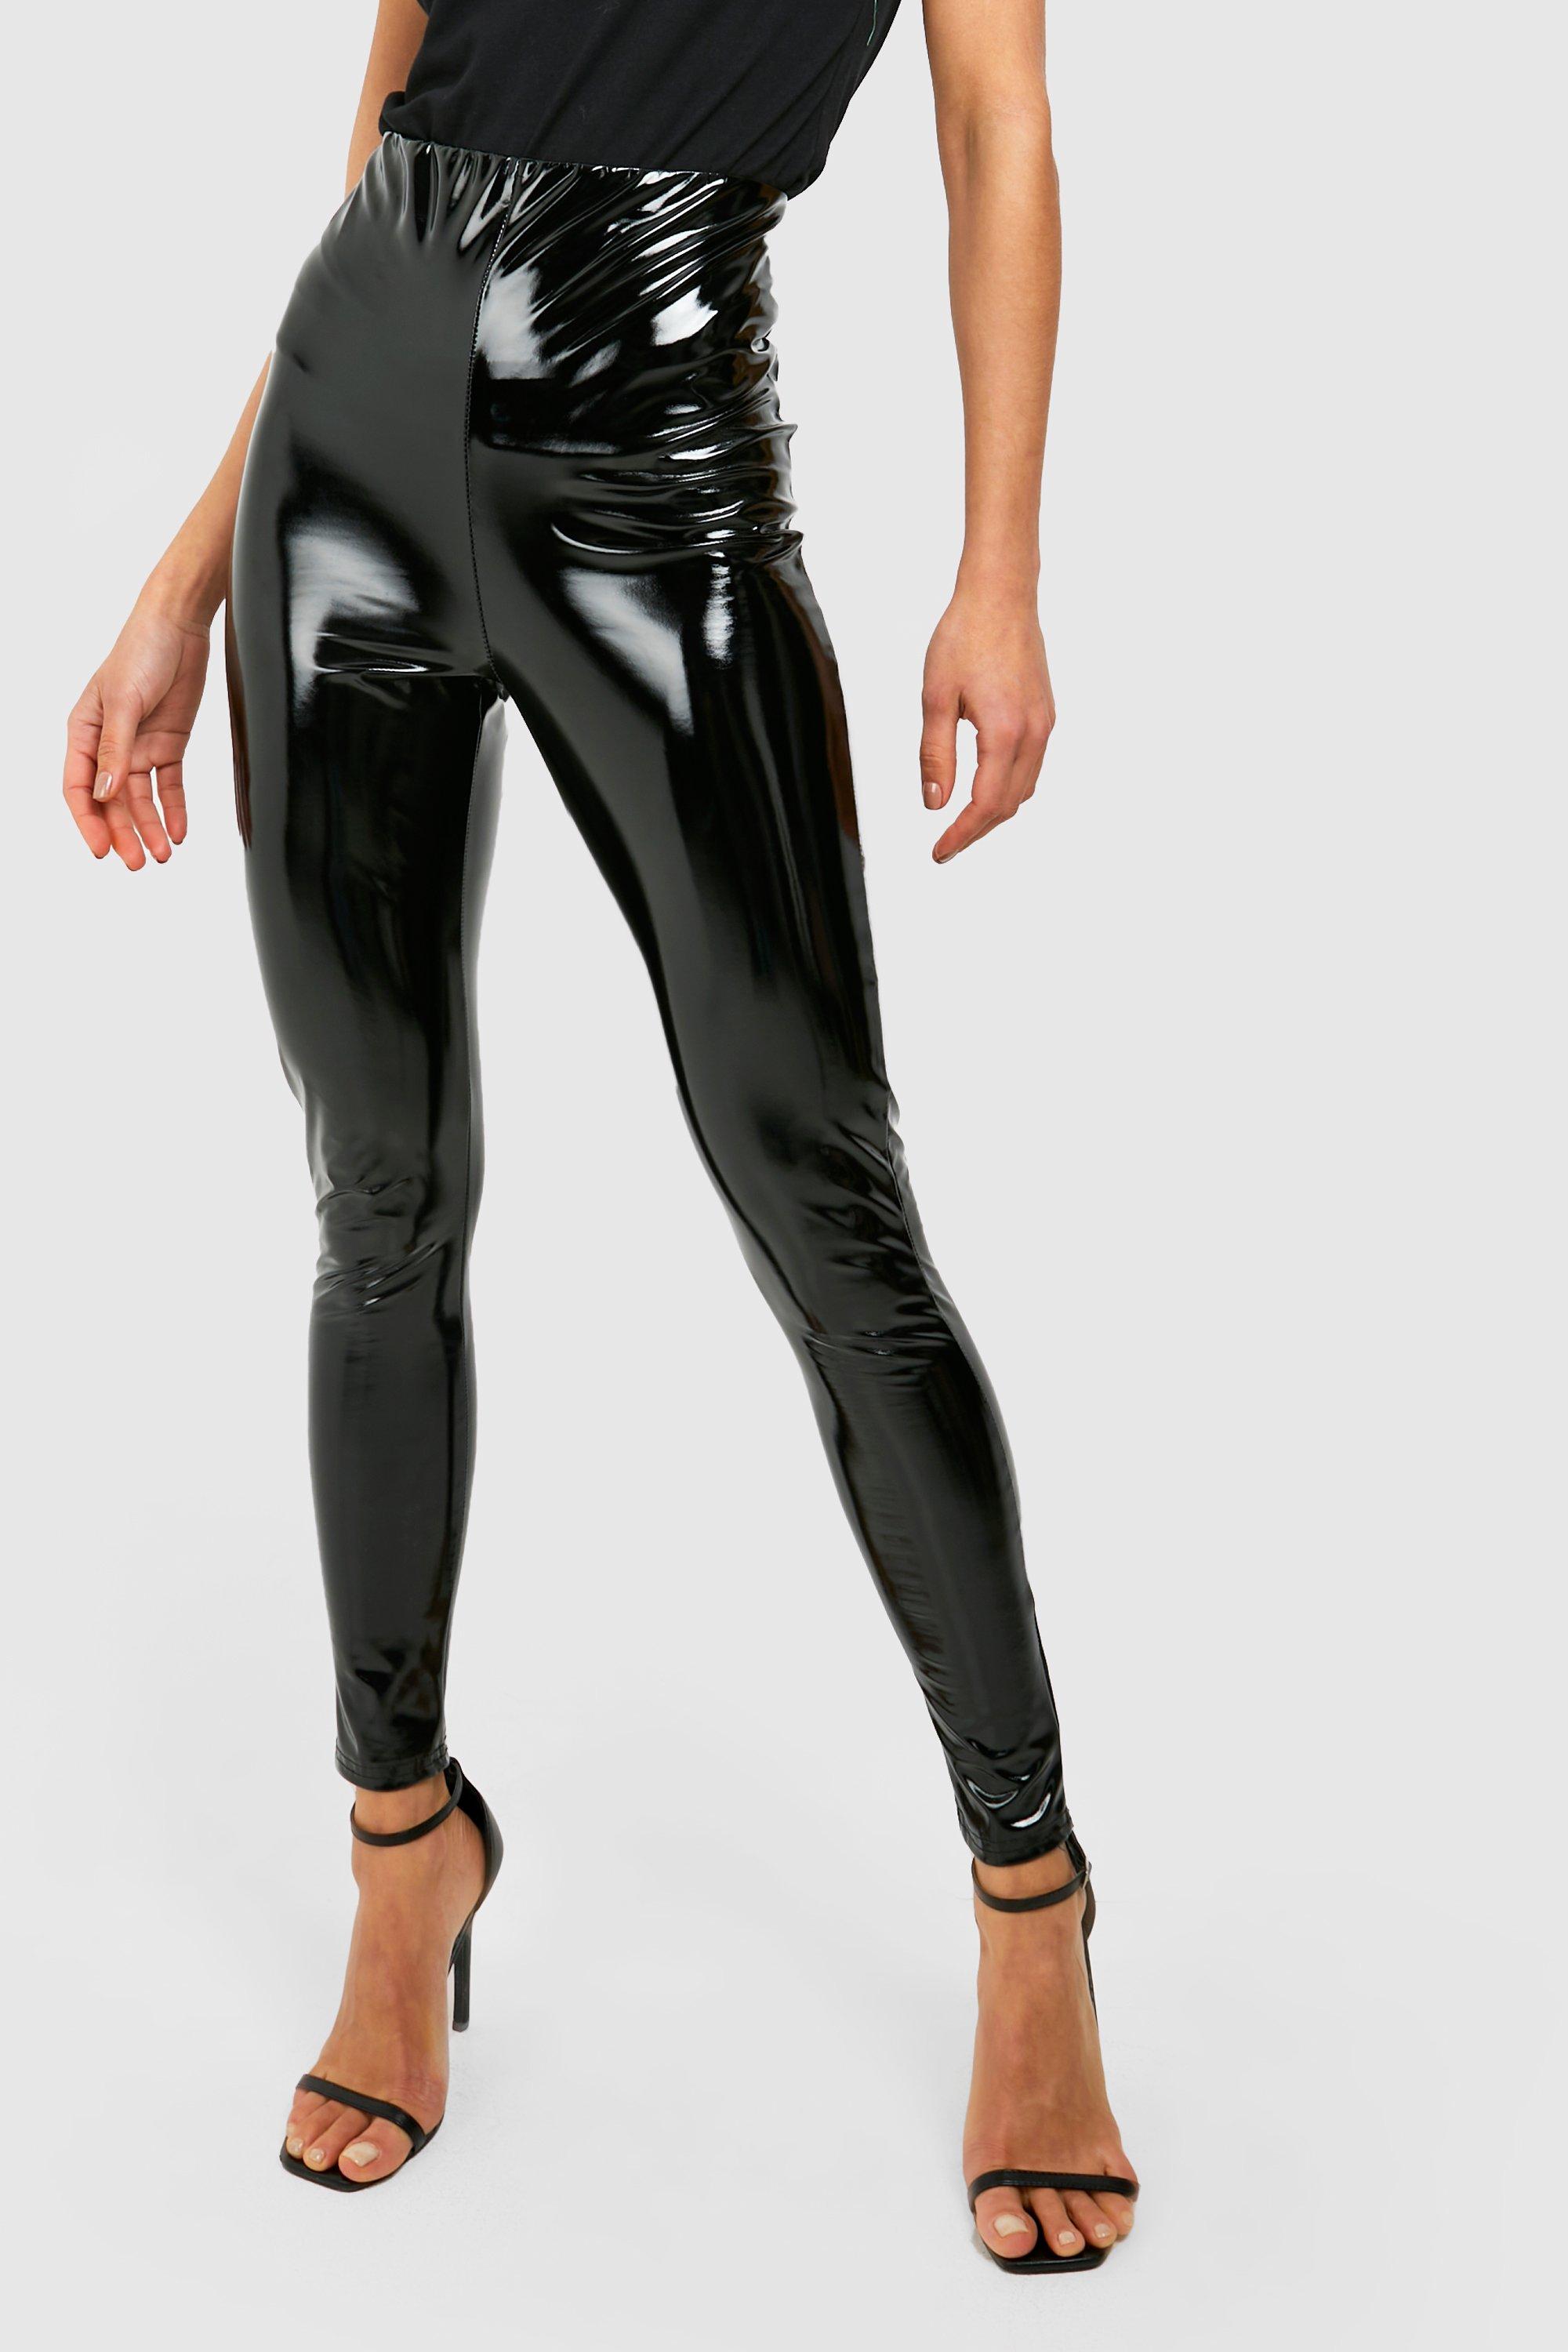 https://media.boohoo.com/i/boohoo/gzz49725_black_xl_3/female-black-high-waisted-stretch-vinyl-leggings